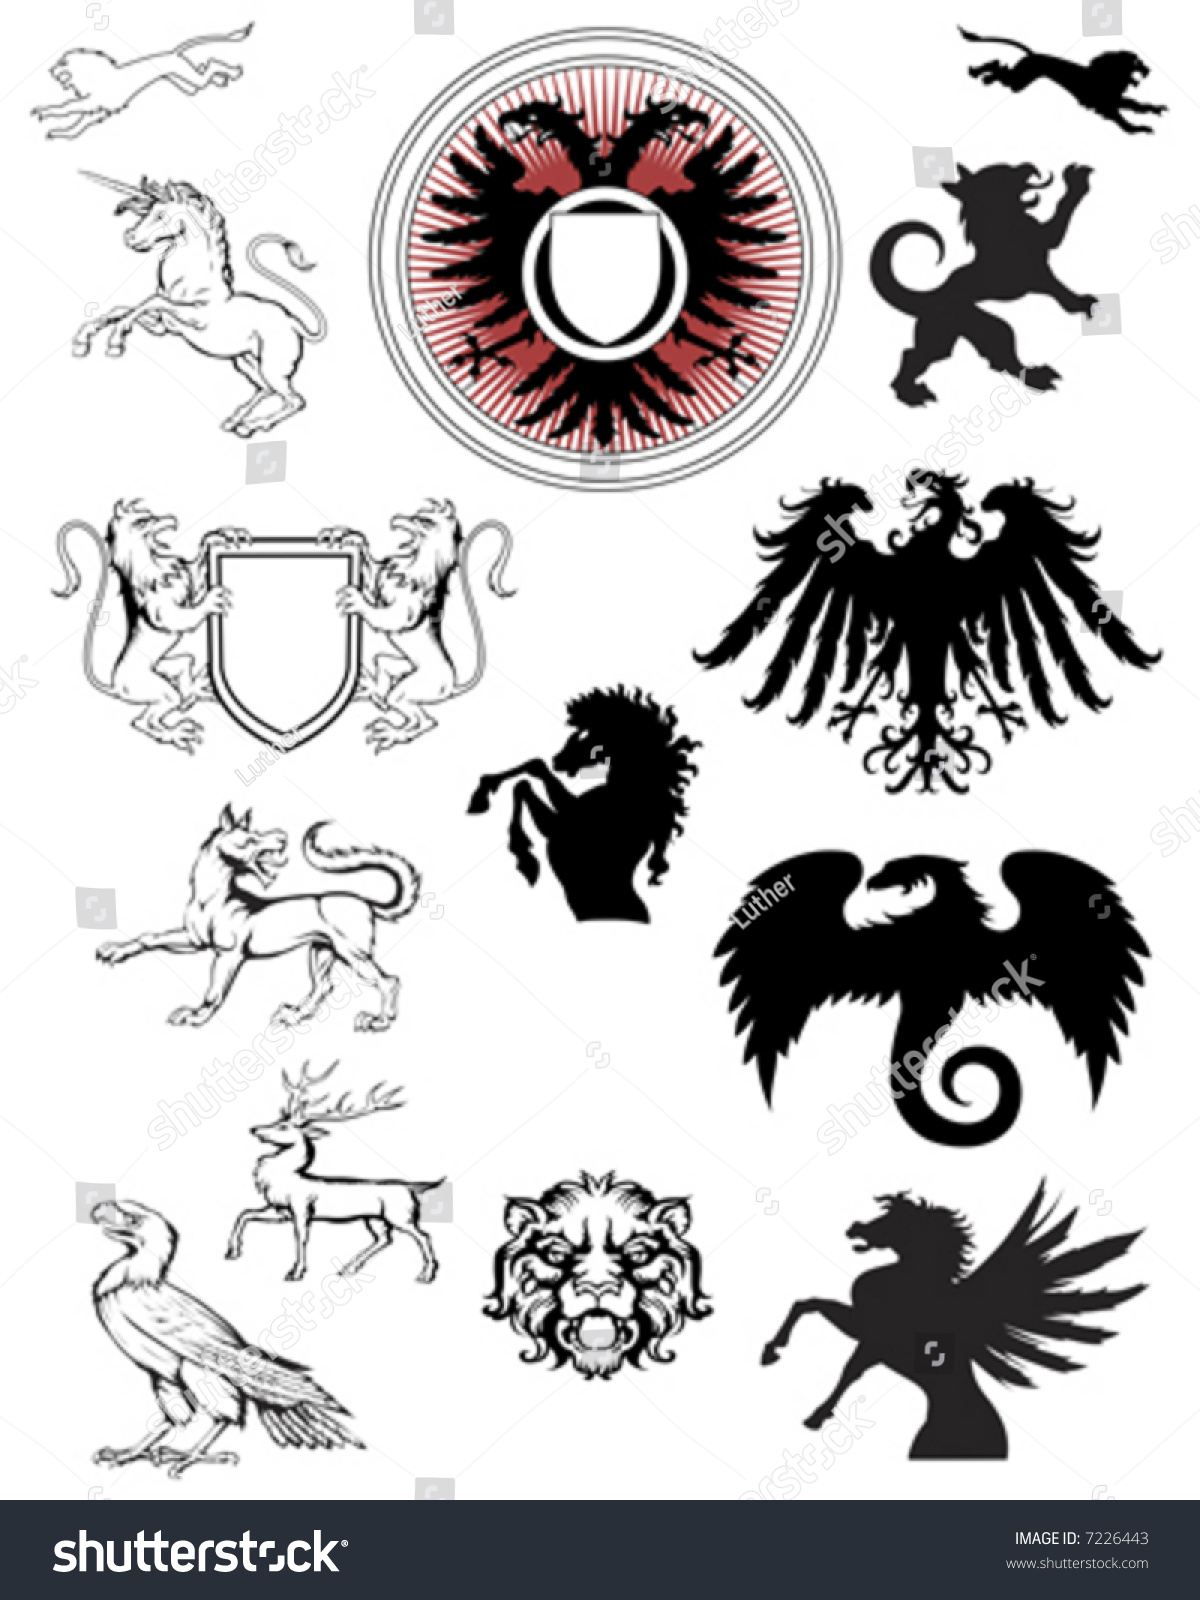 Ornate Crest Emblems Stock Vector 7226443 - Shutterstock